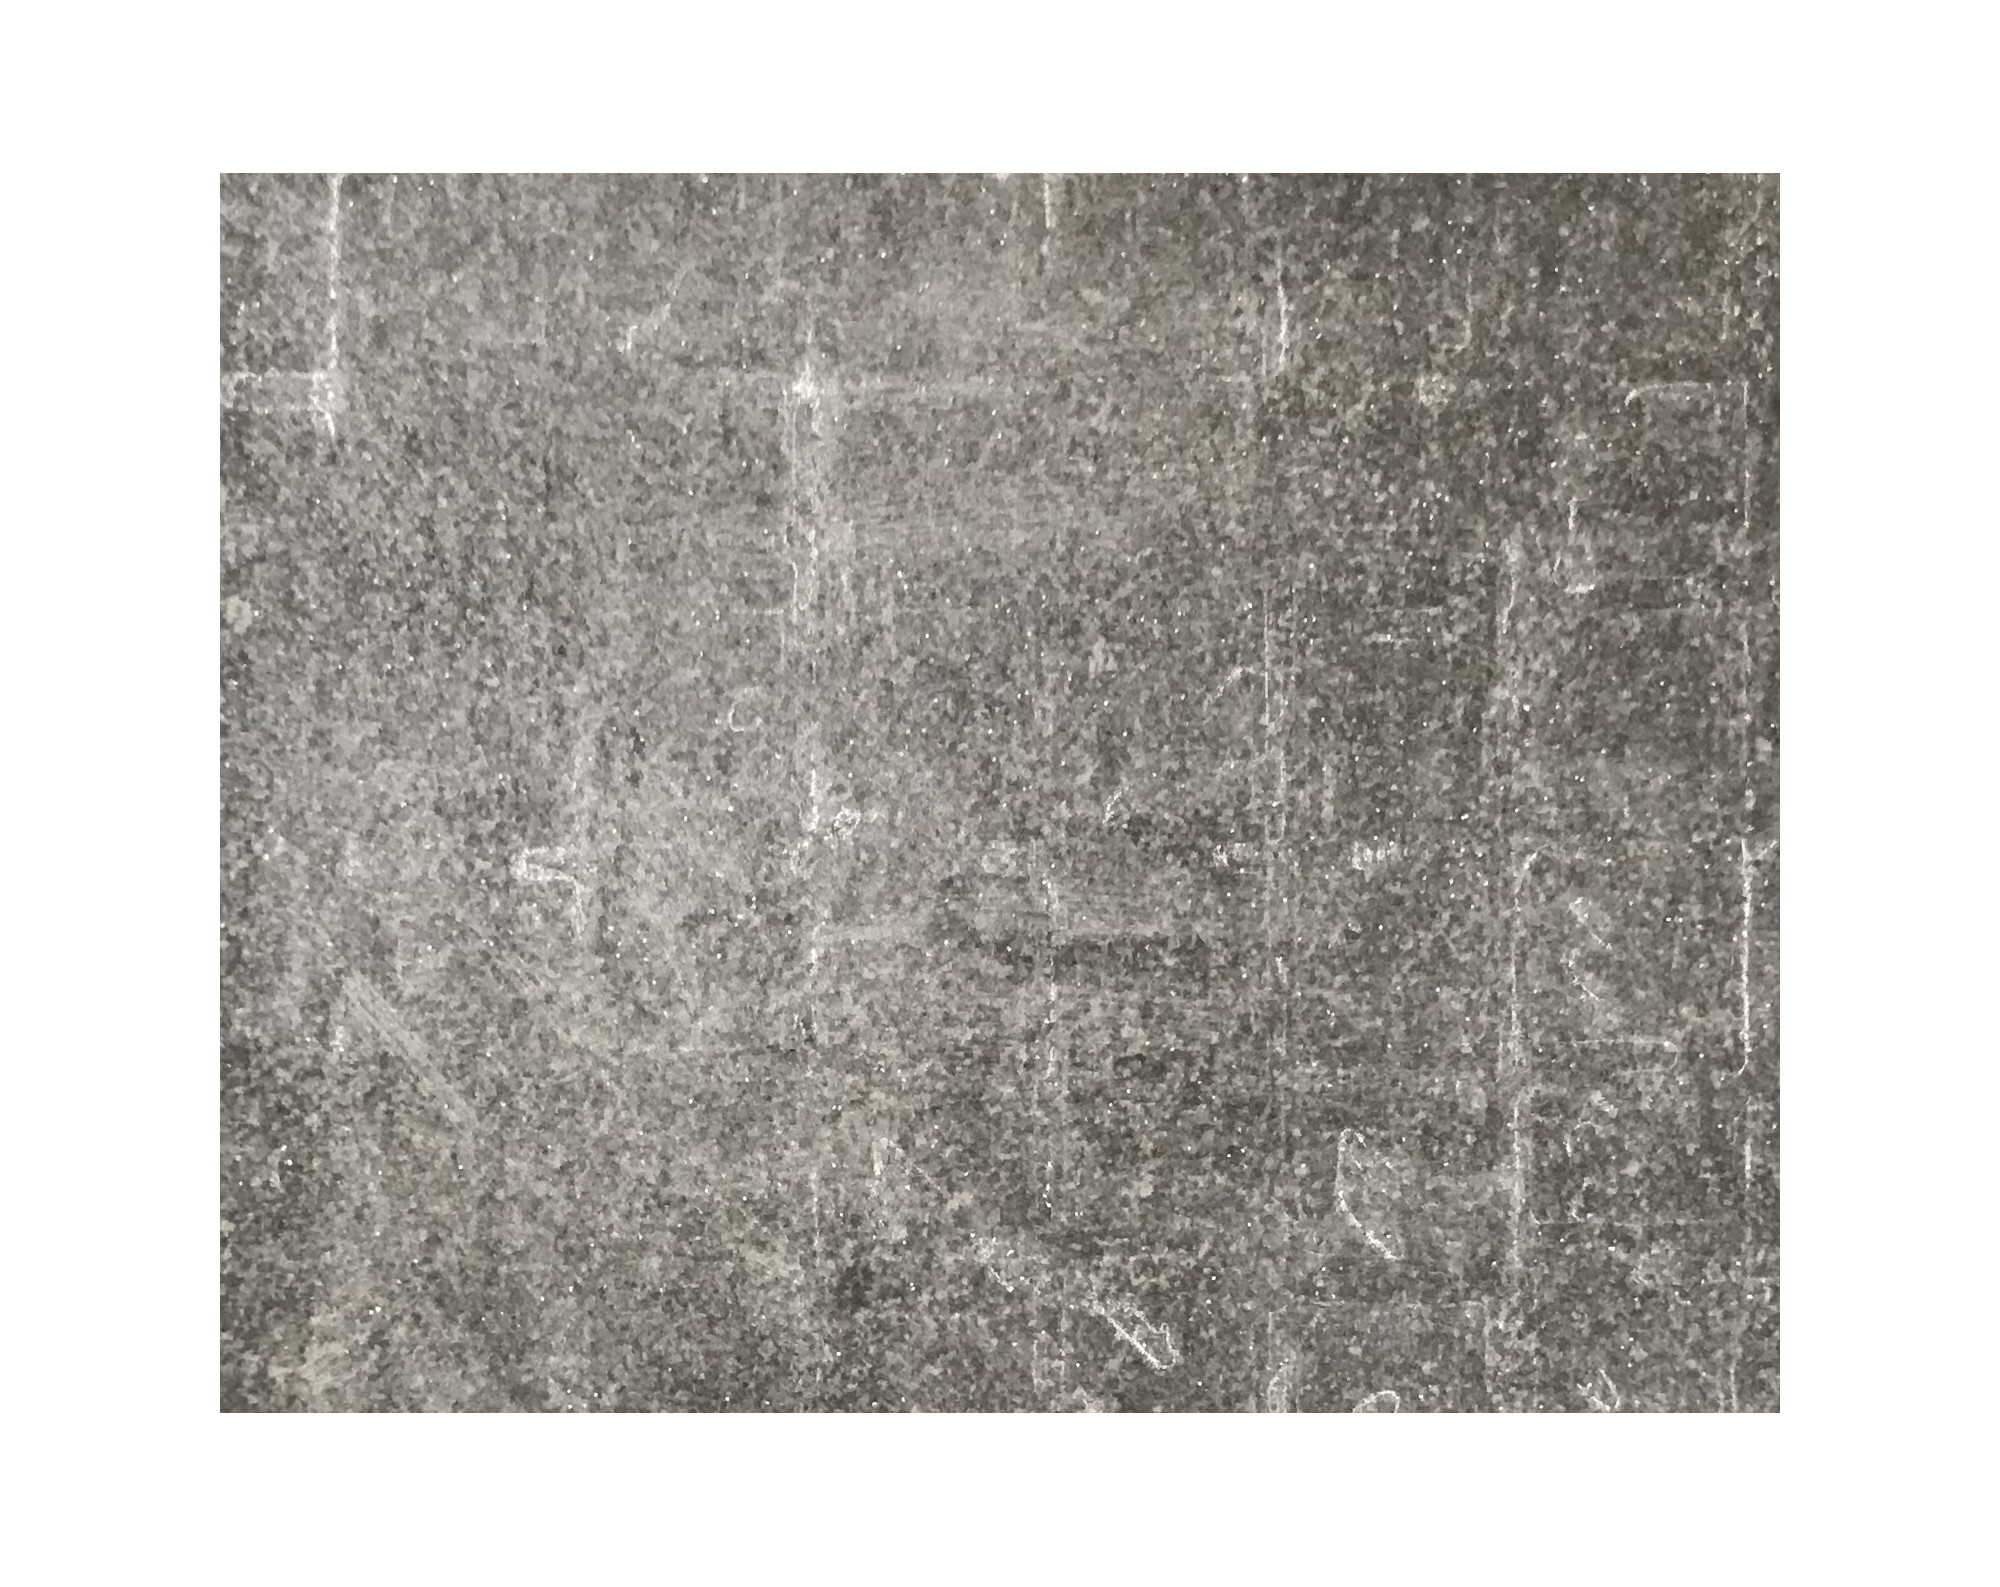 Harmo roc maranelloset, keramiek-serie, rond d:7,00m, zand zwart, keramisch porselein